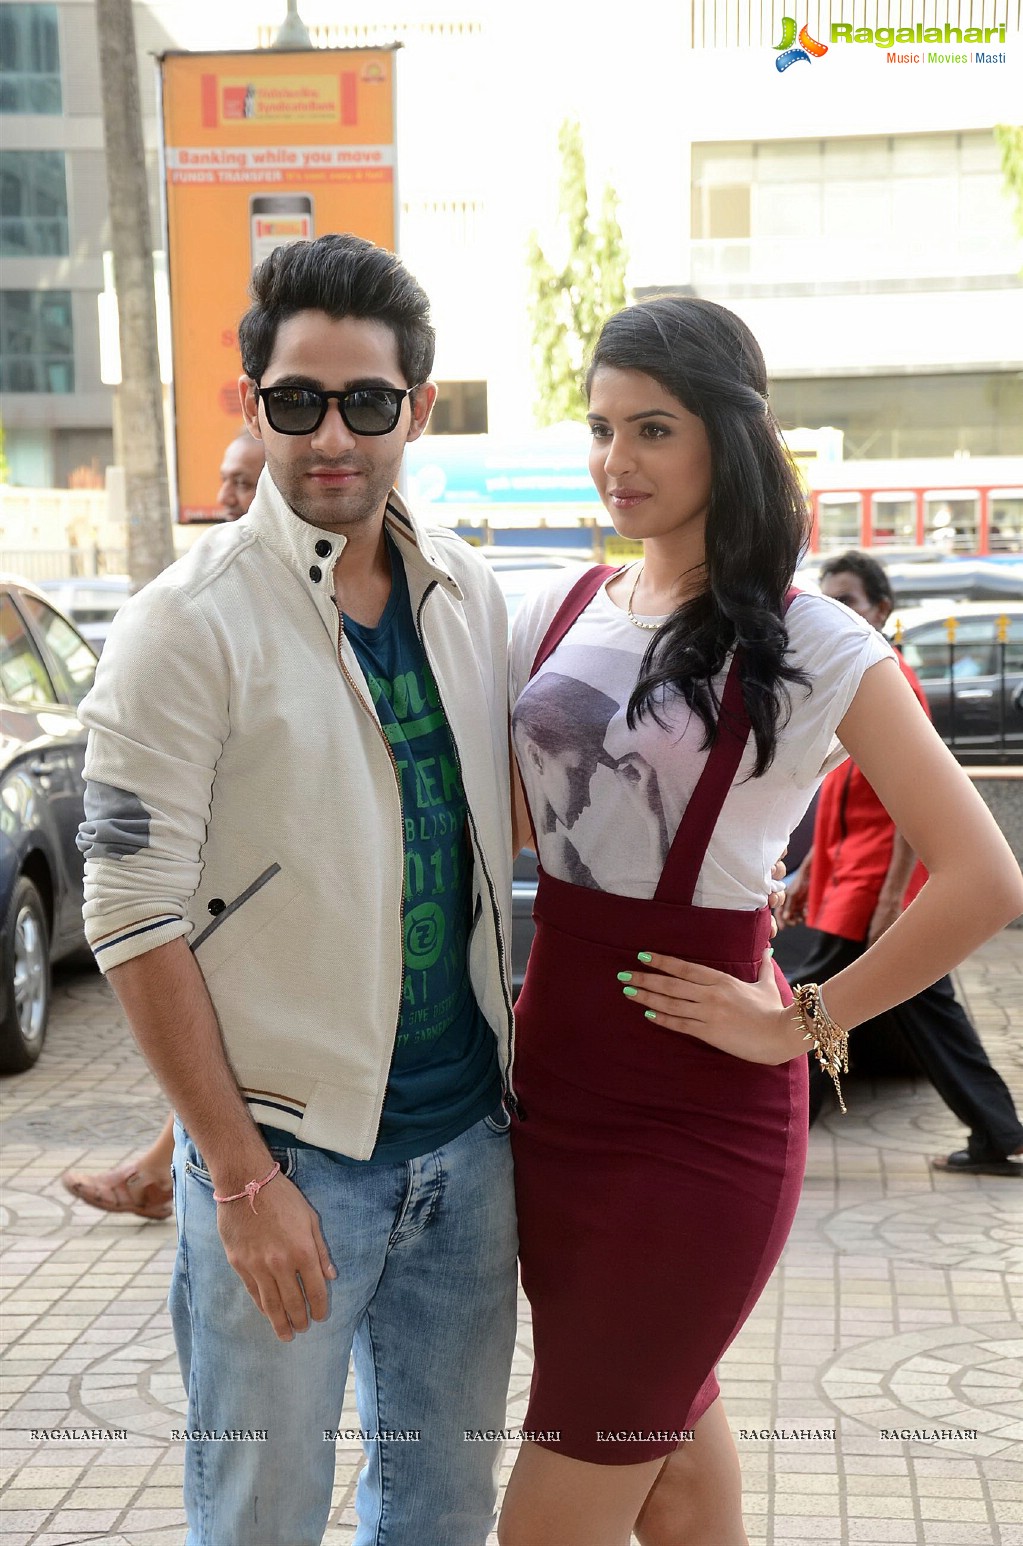 Armaan Jain and Deeksha Seth at Oberoi Mall, Mumbai